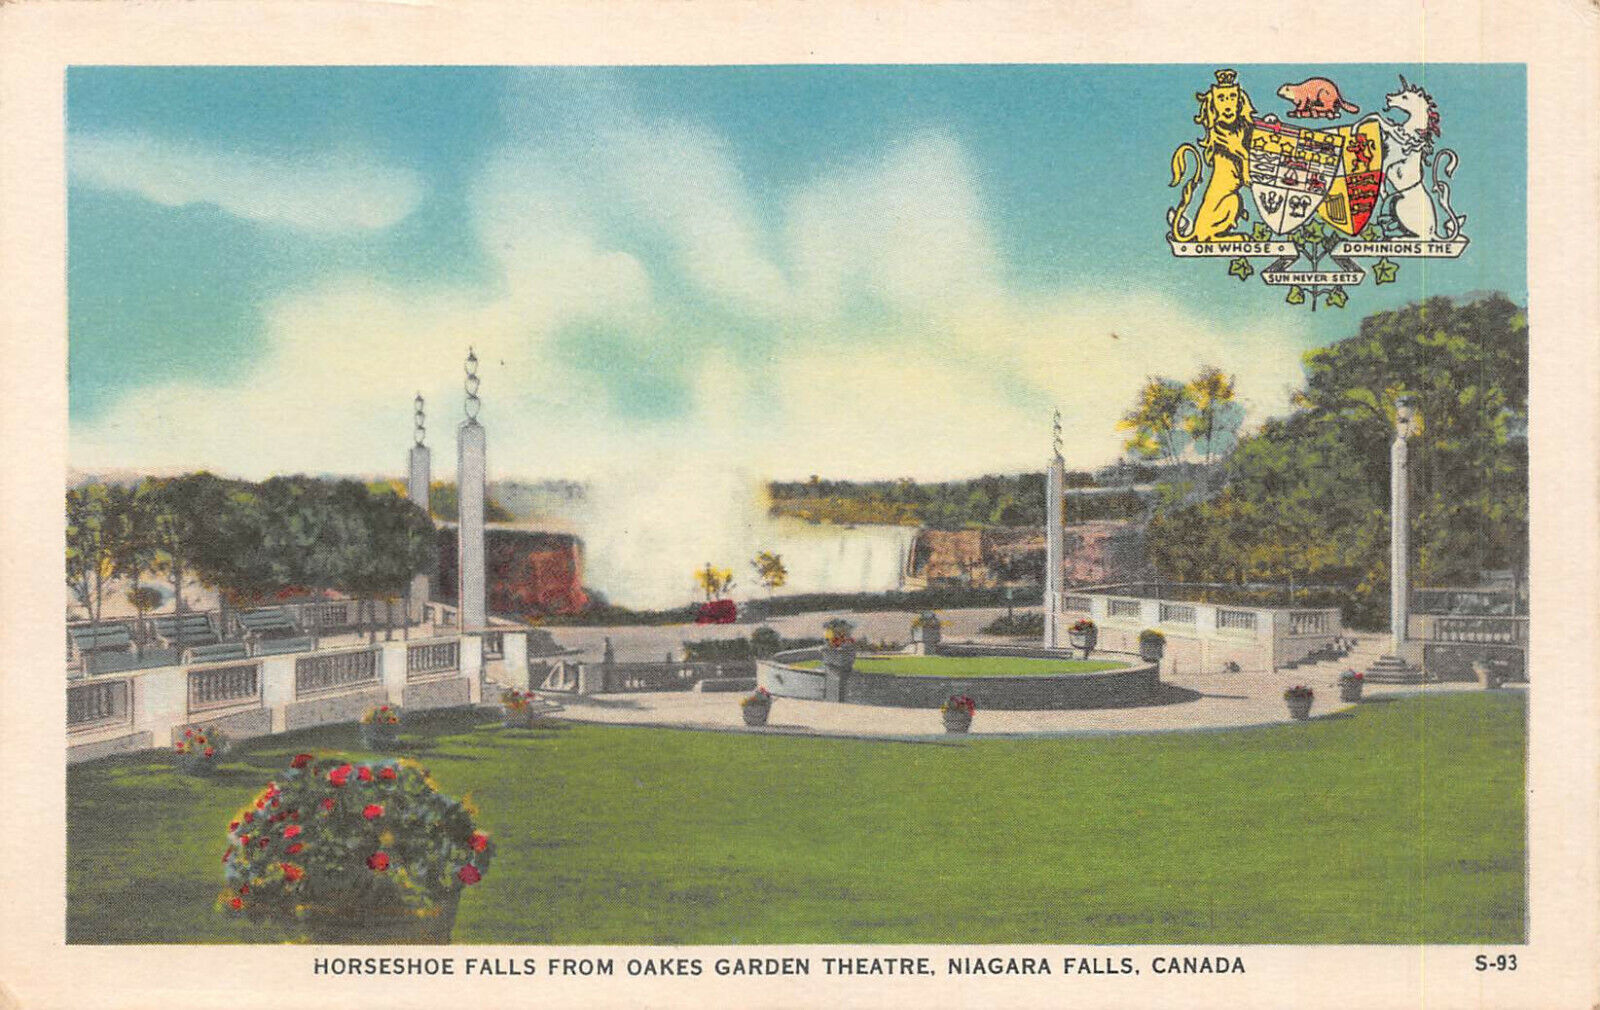  Horseshoe Falls From Oakes Garden Theatre, Niagara Falls, Canada - FREESHIP